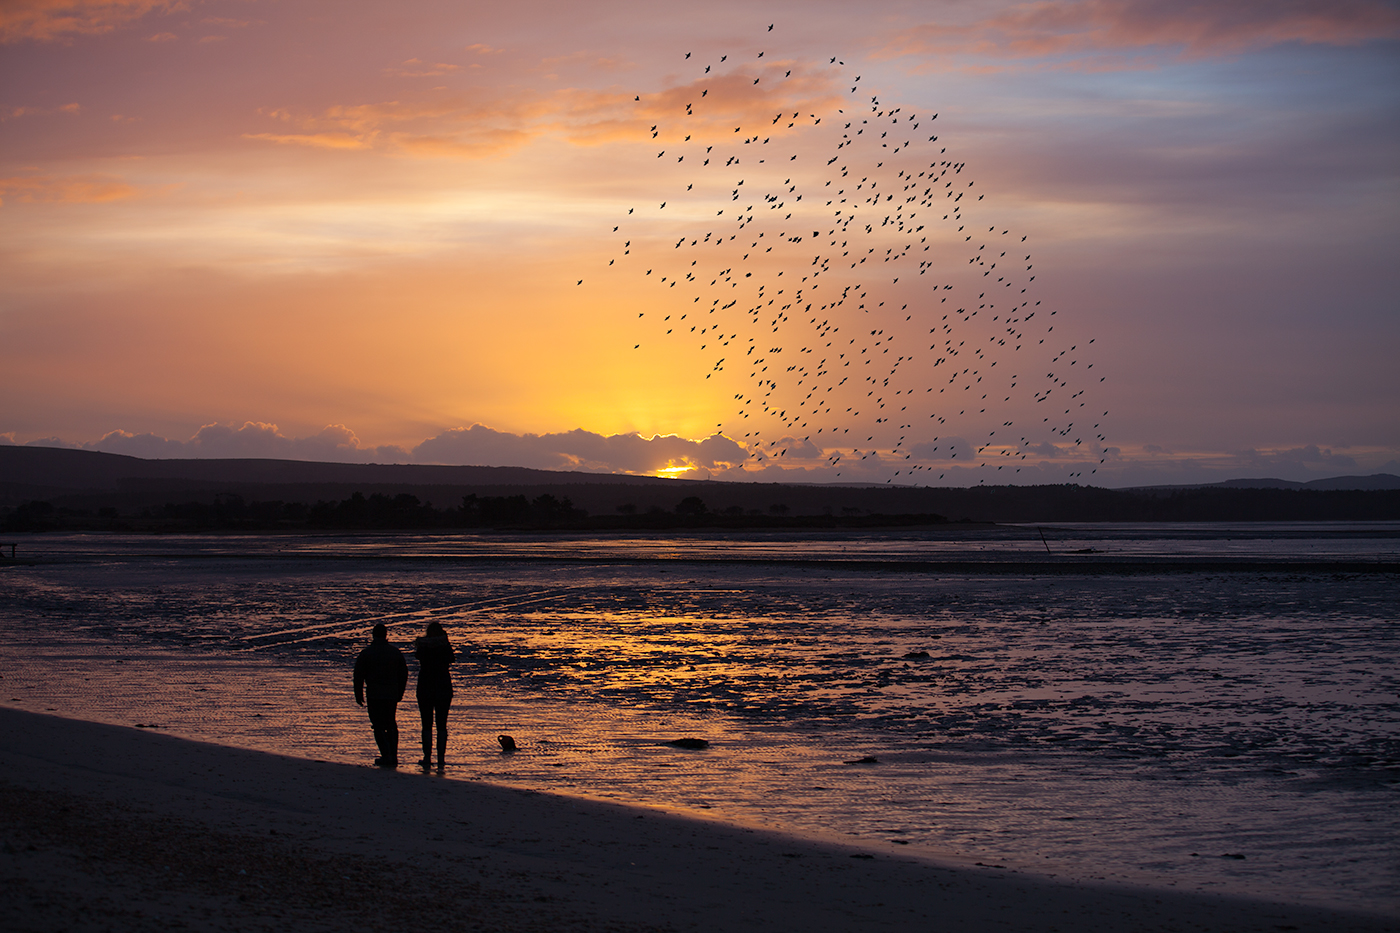 Murmurating starlings over Poole Harbour